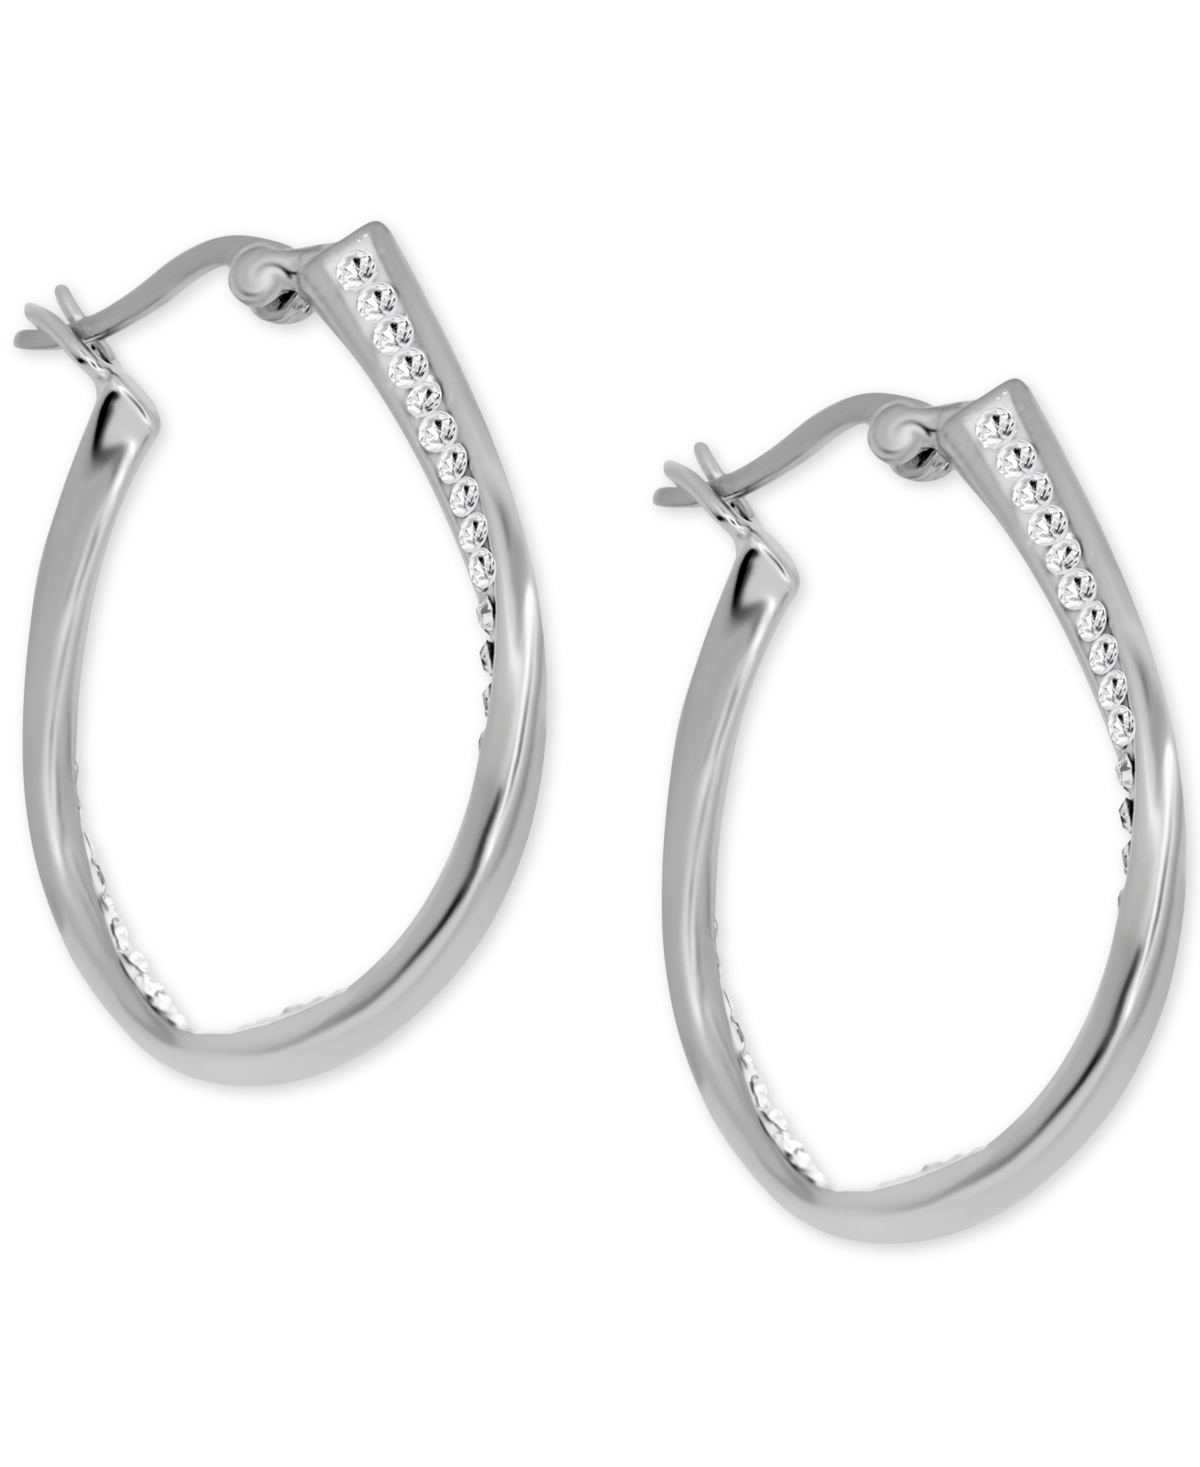 Crystal Small Hoop Earrings in Silver-Plate, 1" - Silver